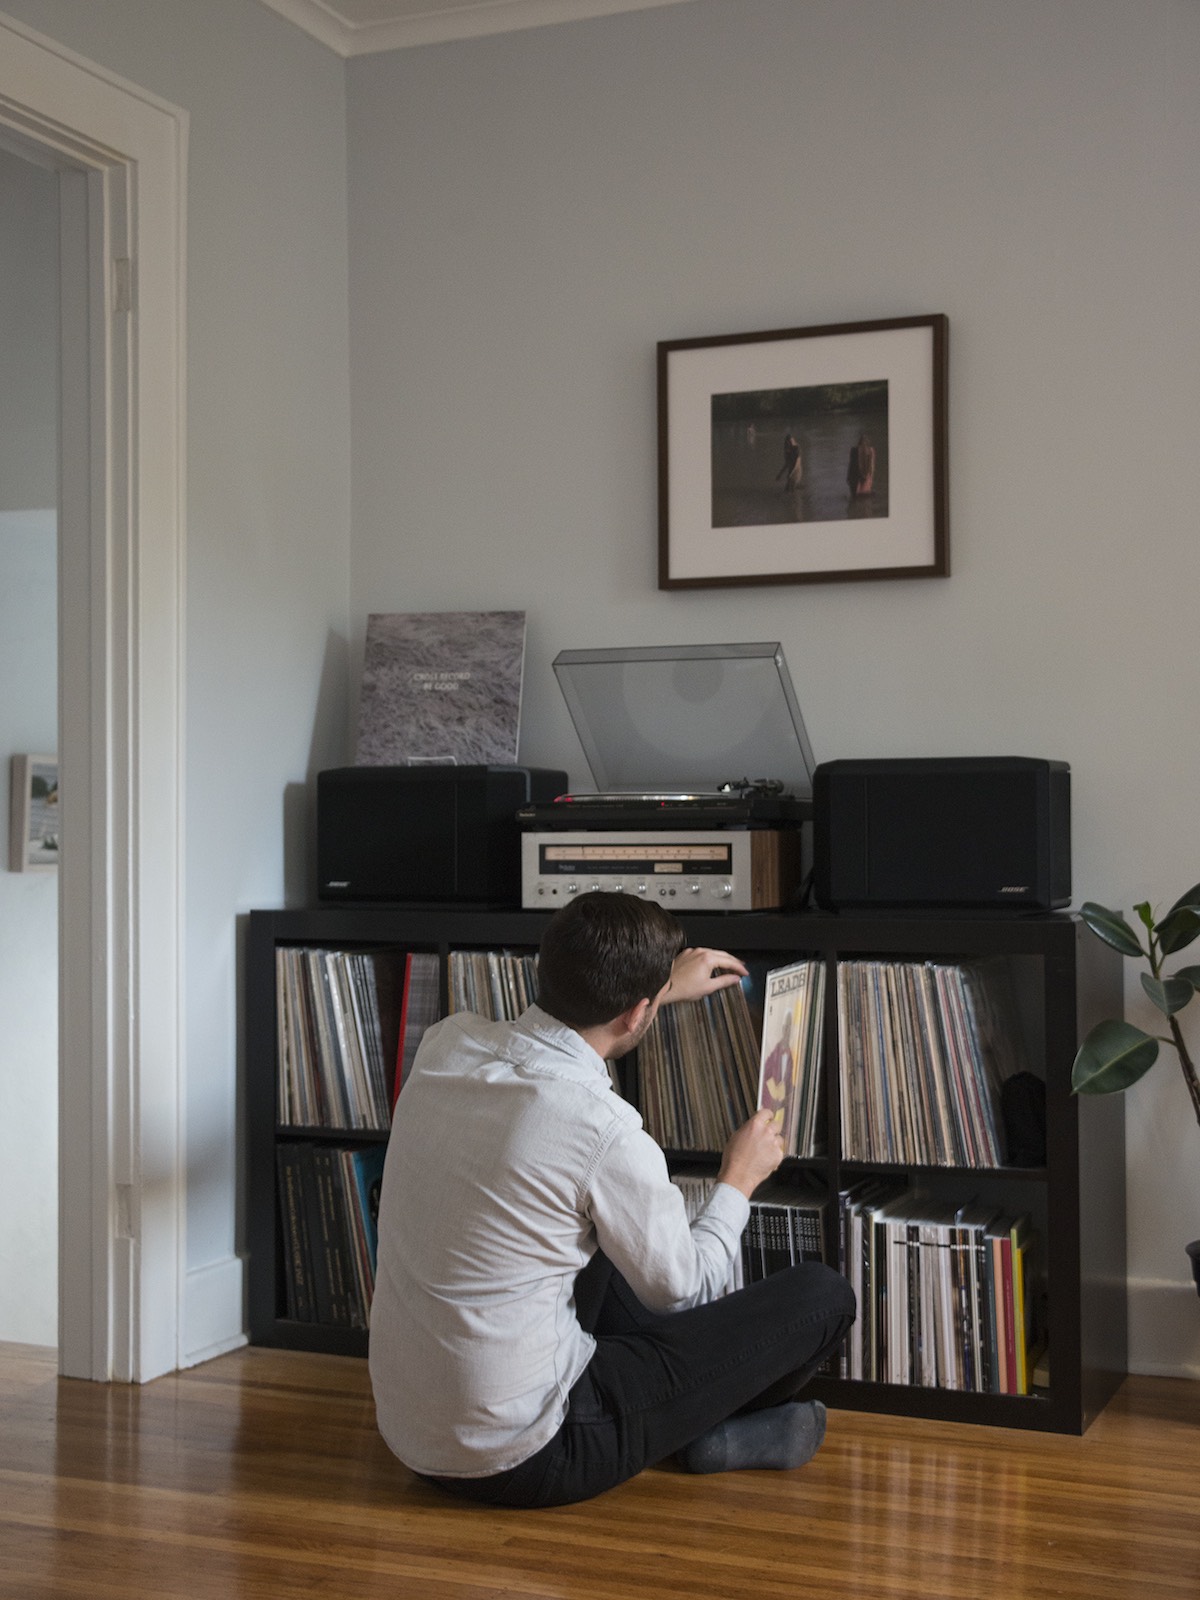 Shane Lavalette in his home studio. Photograph by Allison Beondé, 2015